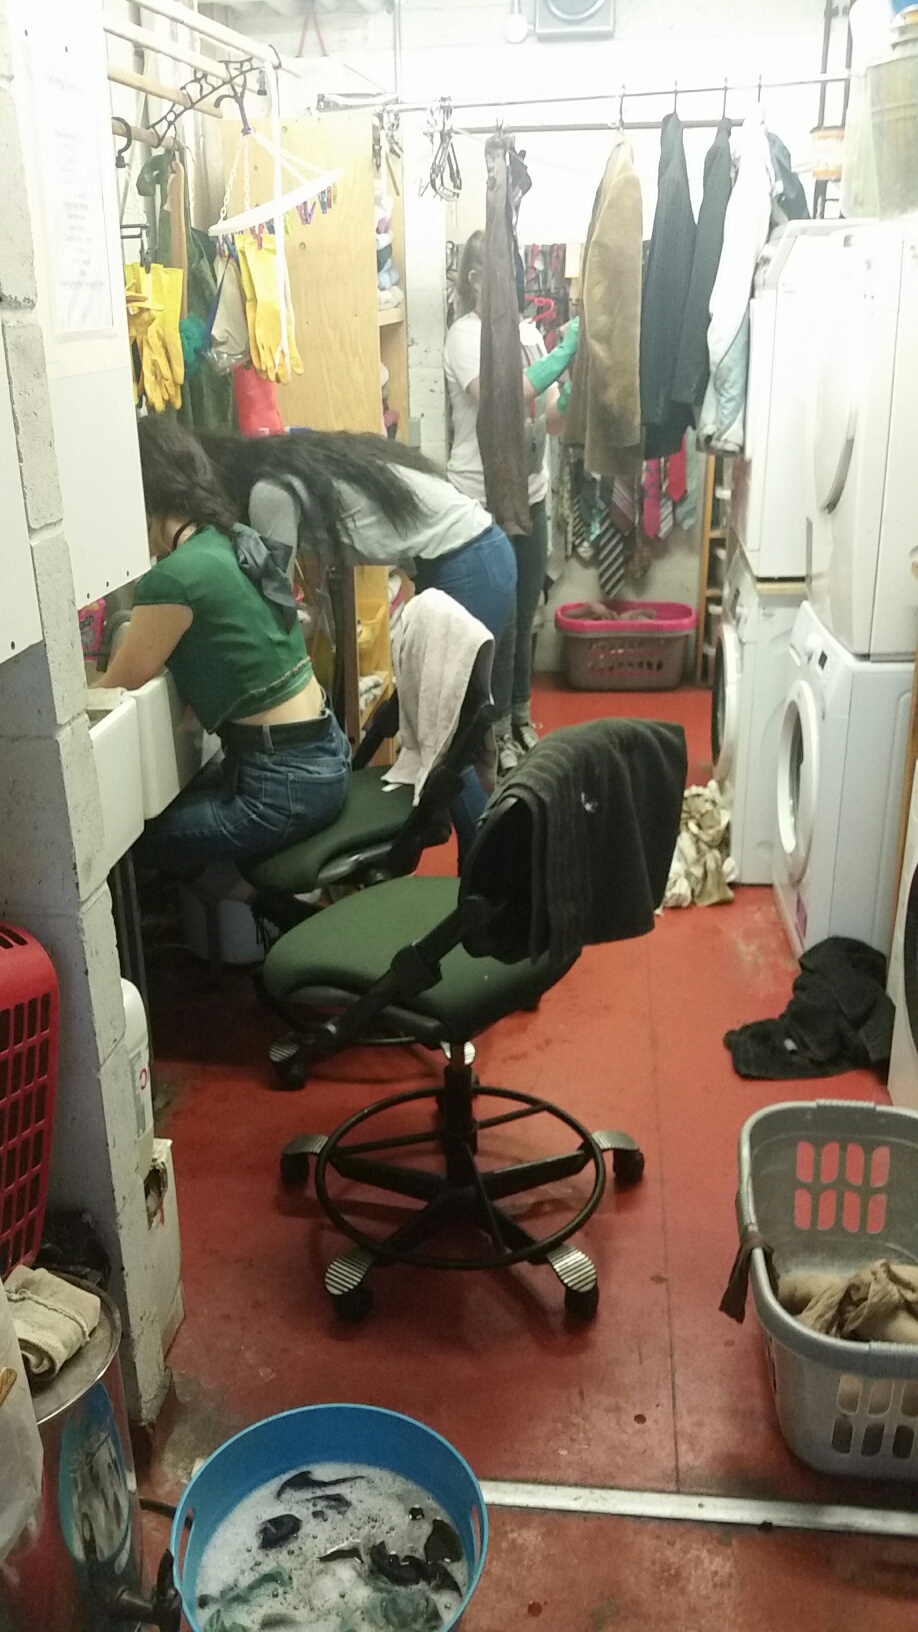 Wardrobe staff doing the laundry